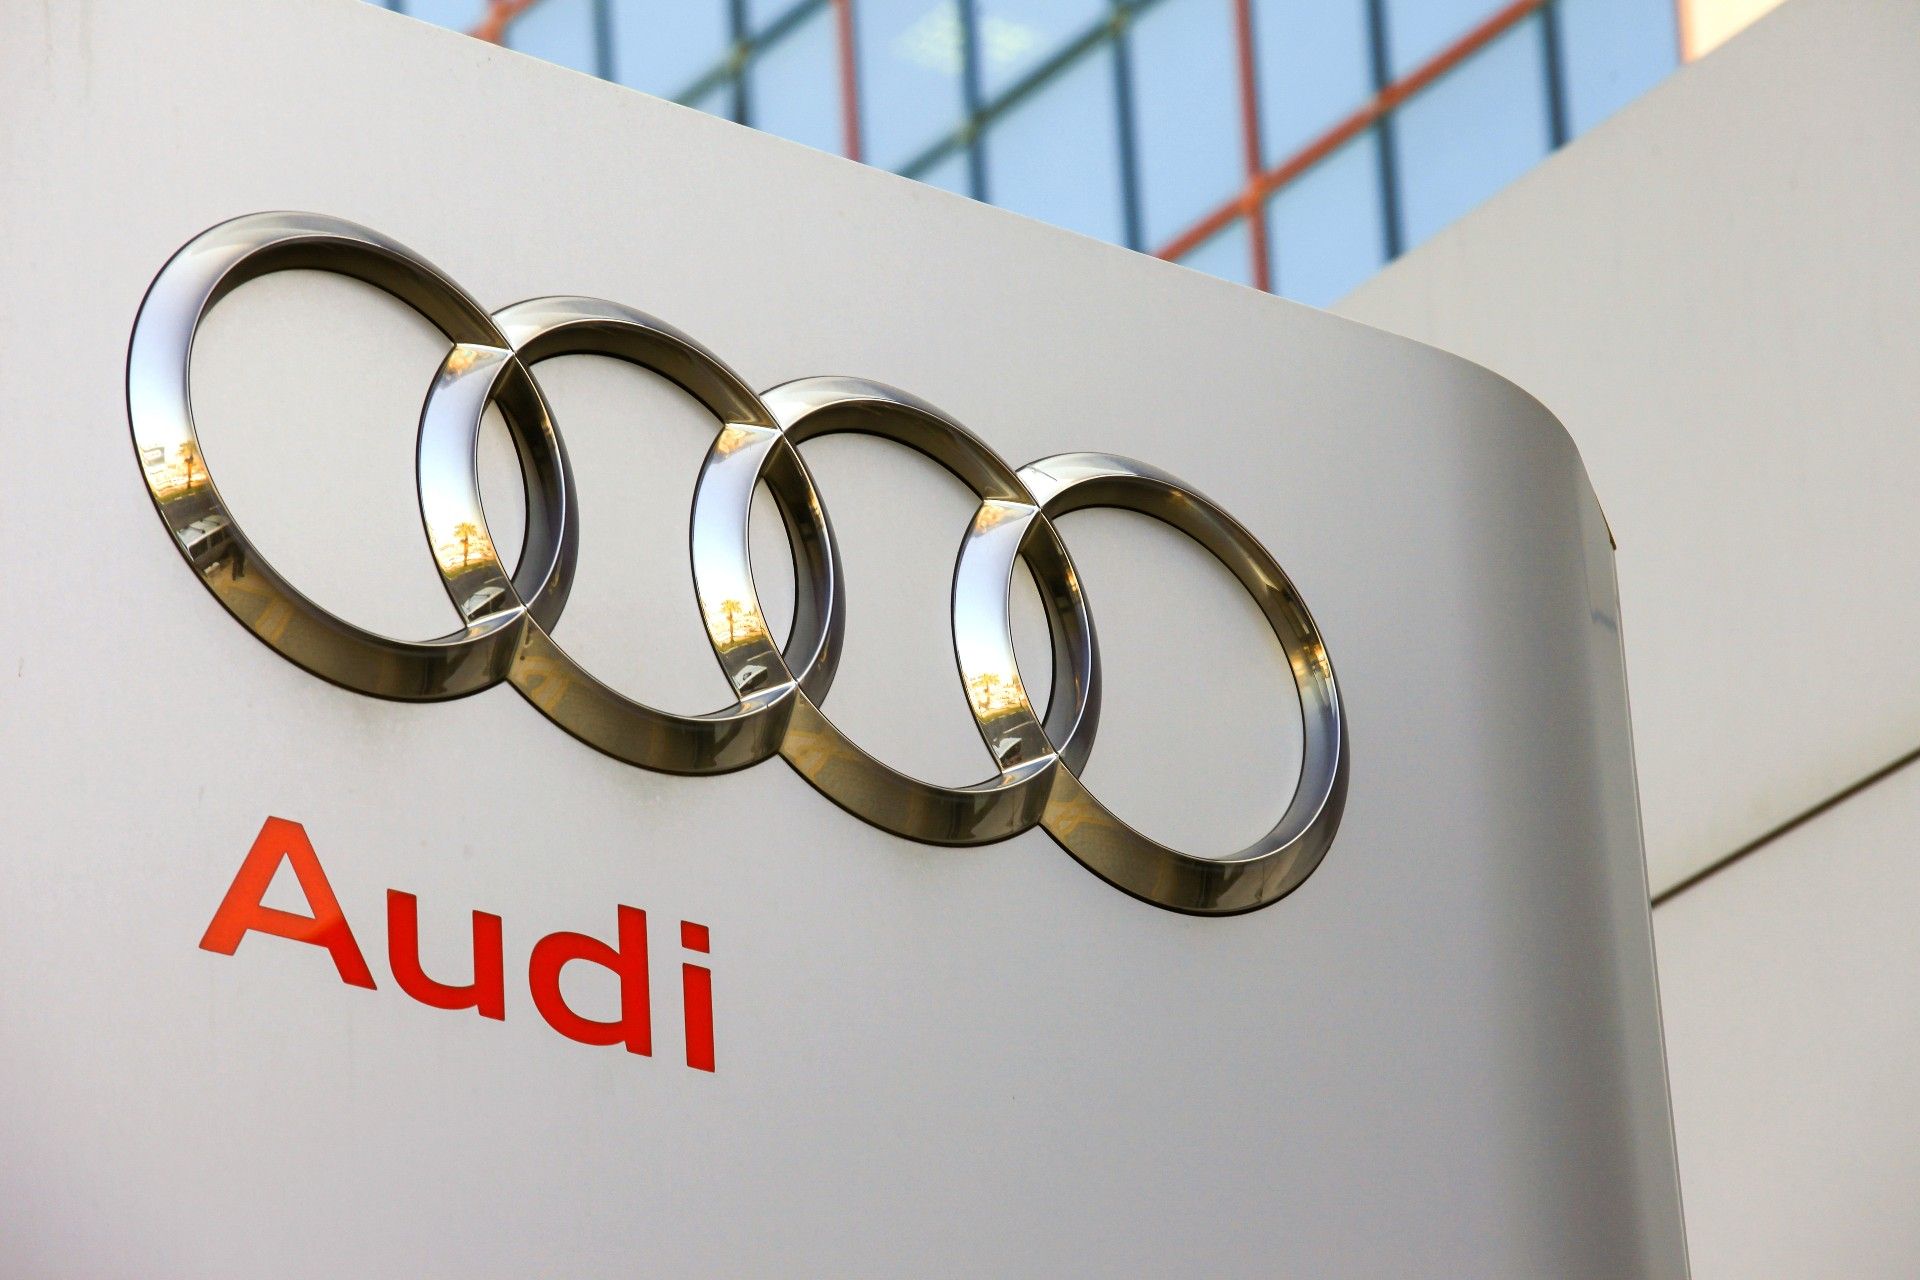 Audi defect lead to VW settlement - Volkswagen settlement